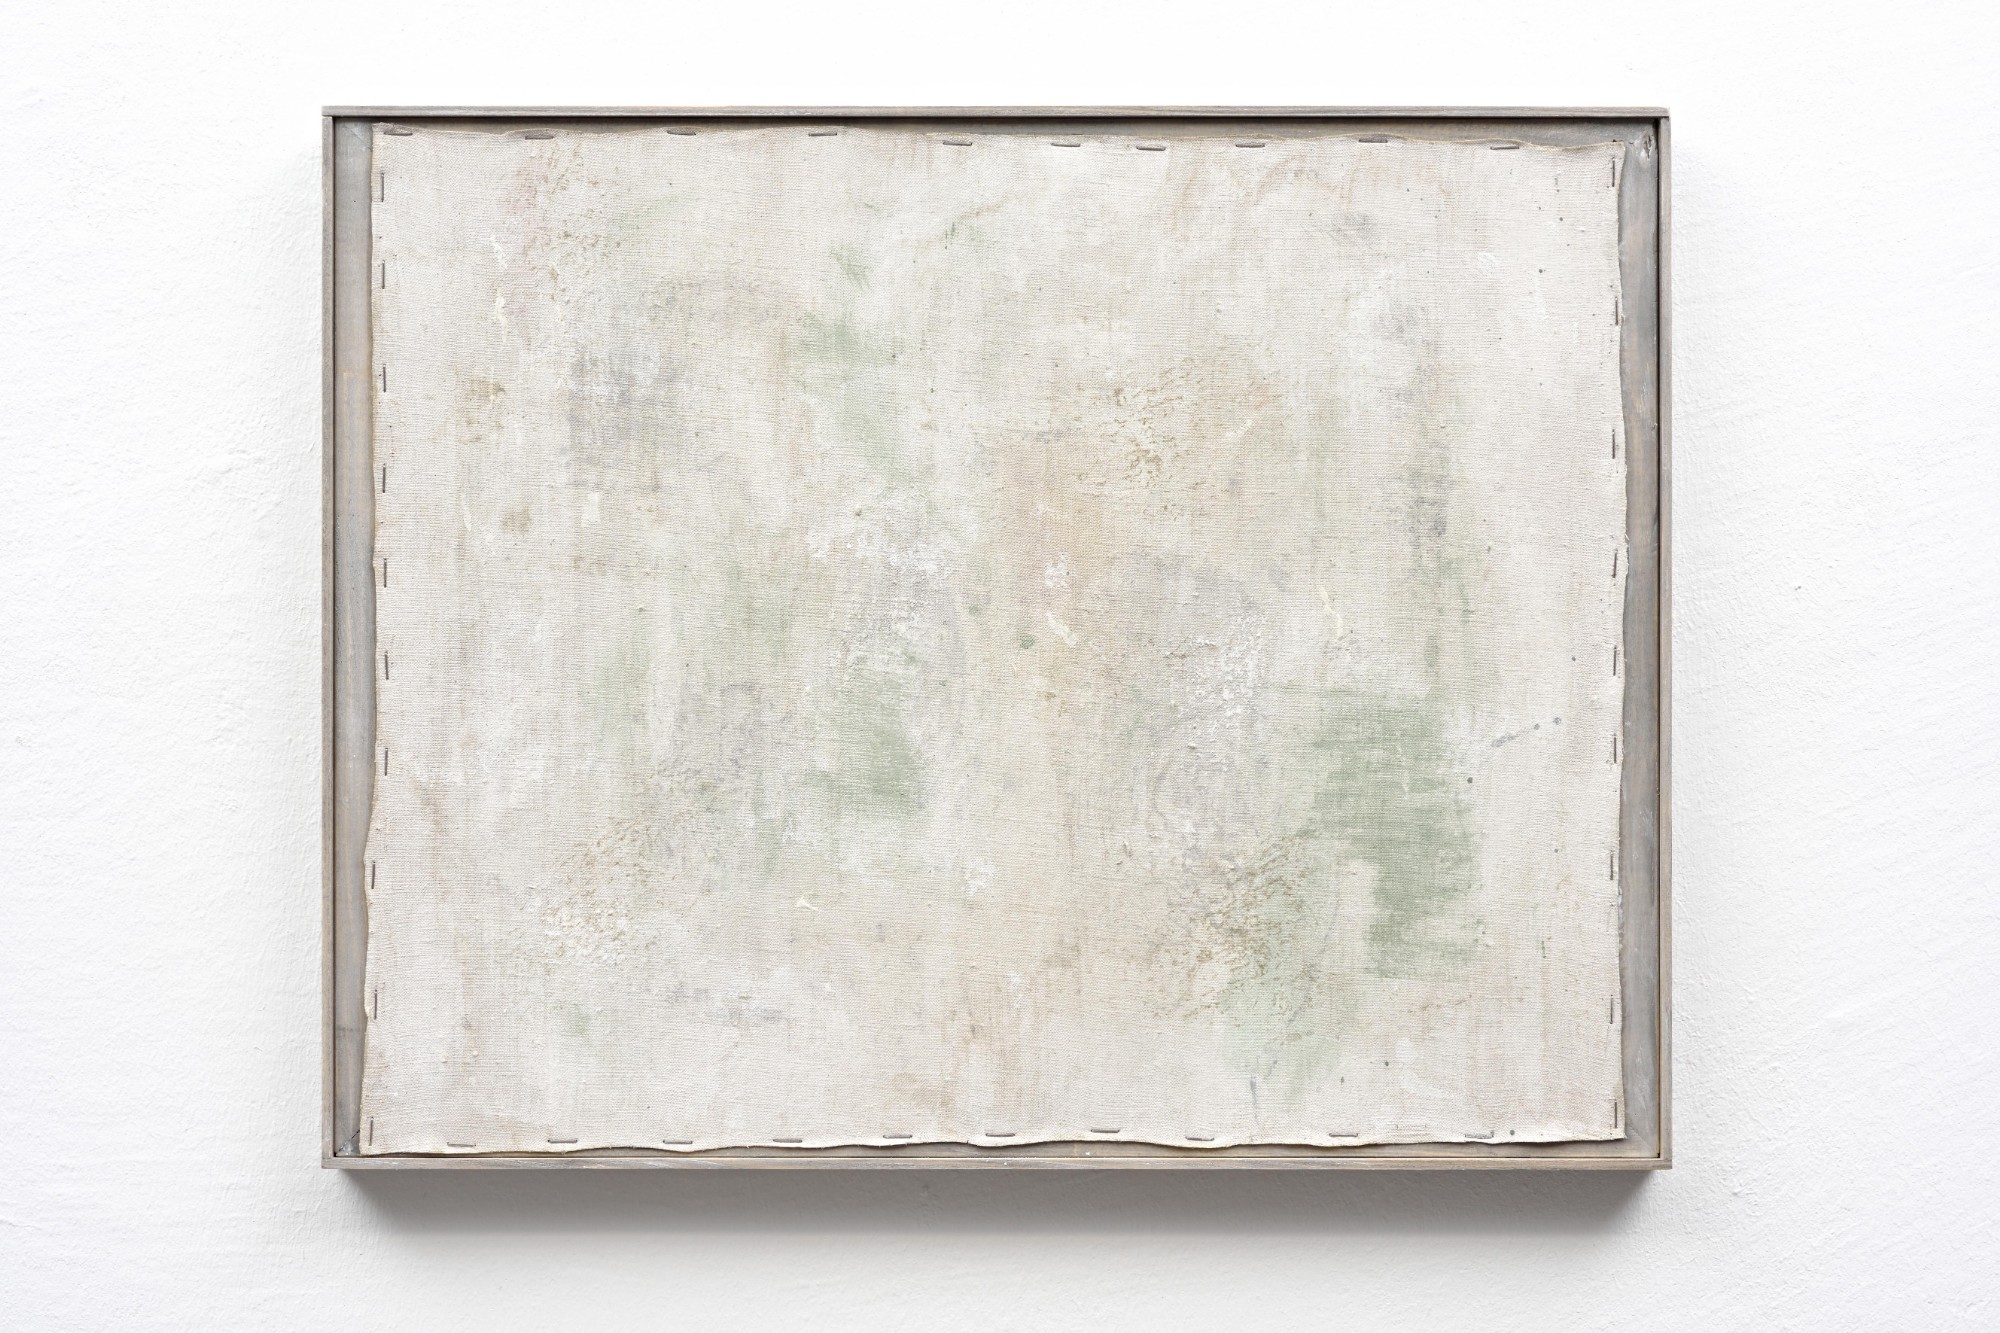 Erwin Gross, untitled, 2016, acrylic, pigment on cotton, 42 x 53 cm